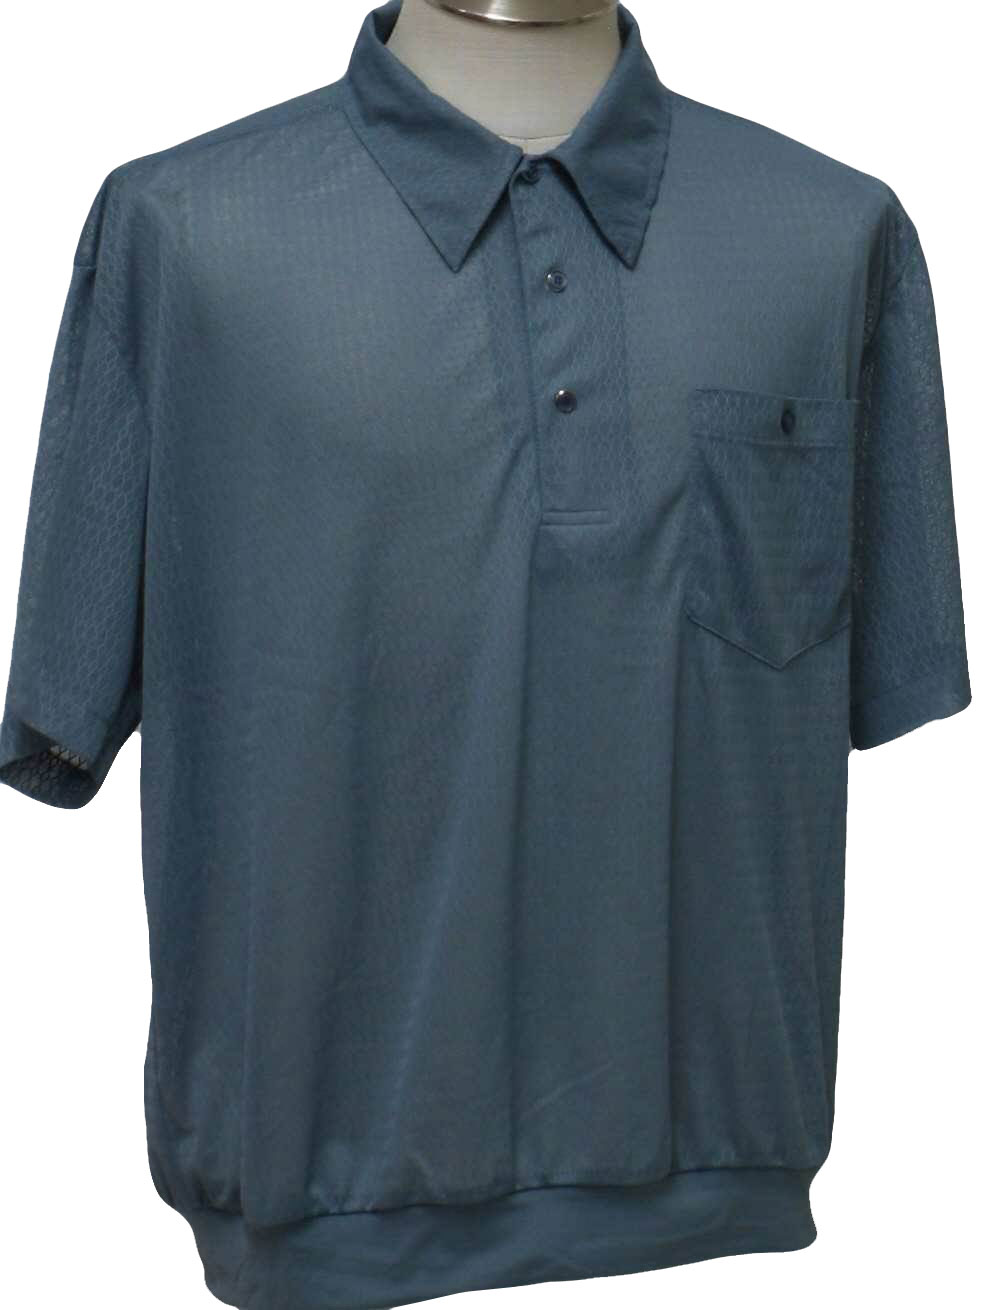 Vintage 1980's Knit Shirt: Late 80s -Haband- Mens dark aqua polyester ...